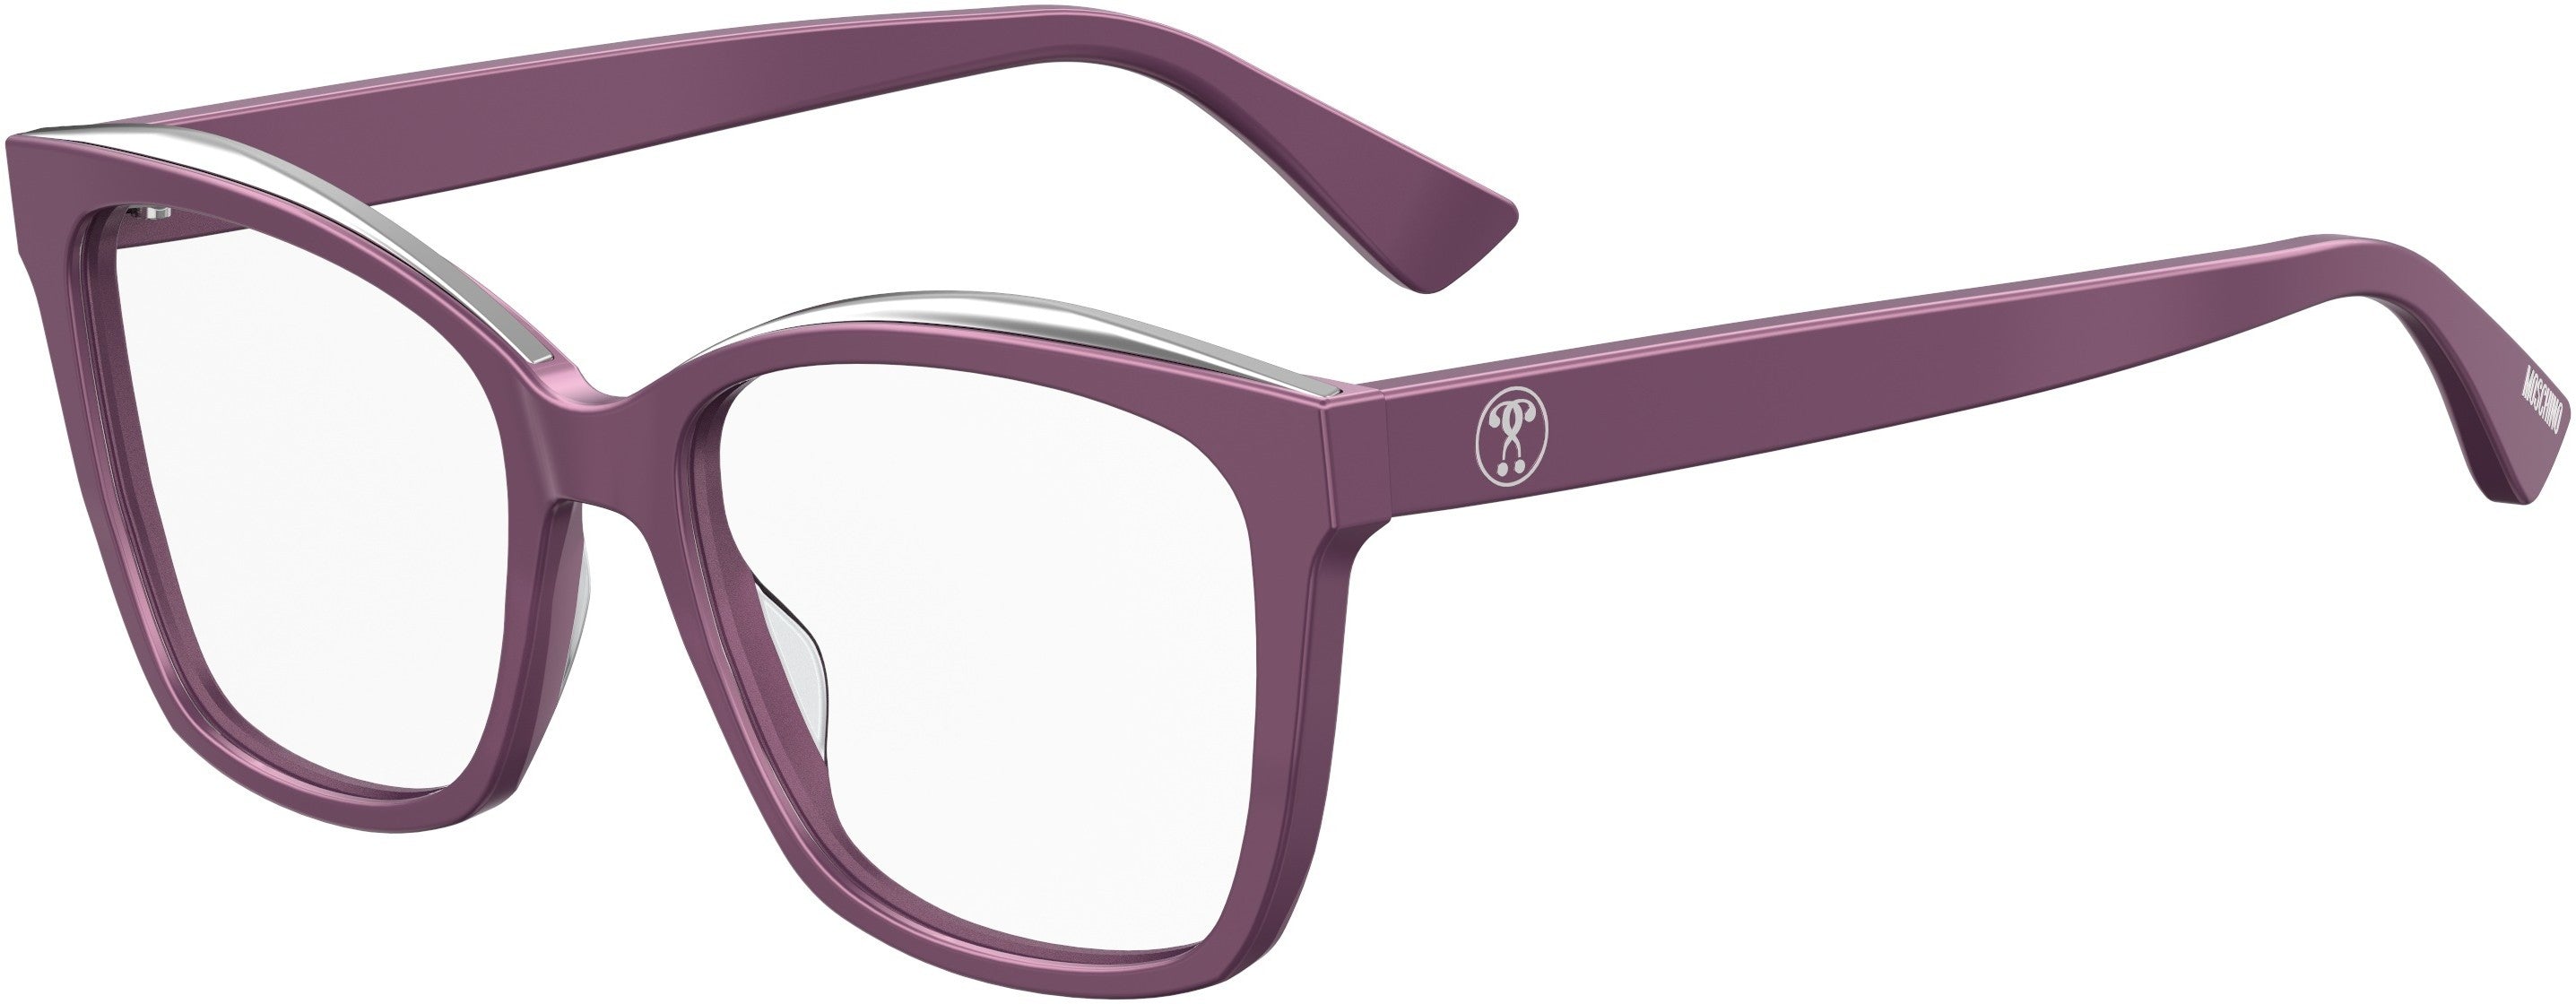  Moschino 528 Rectangular Eyeglasses 0B3V-0B3V  Violet (00 Demo Lens)